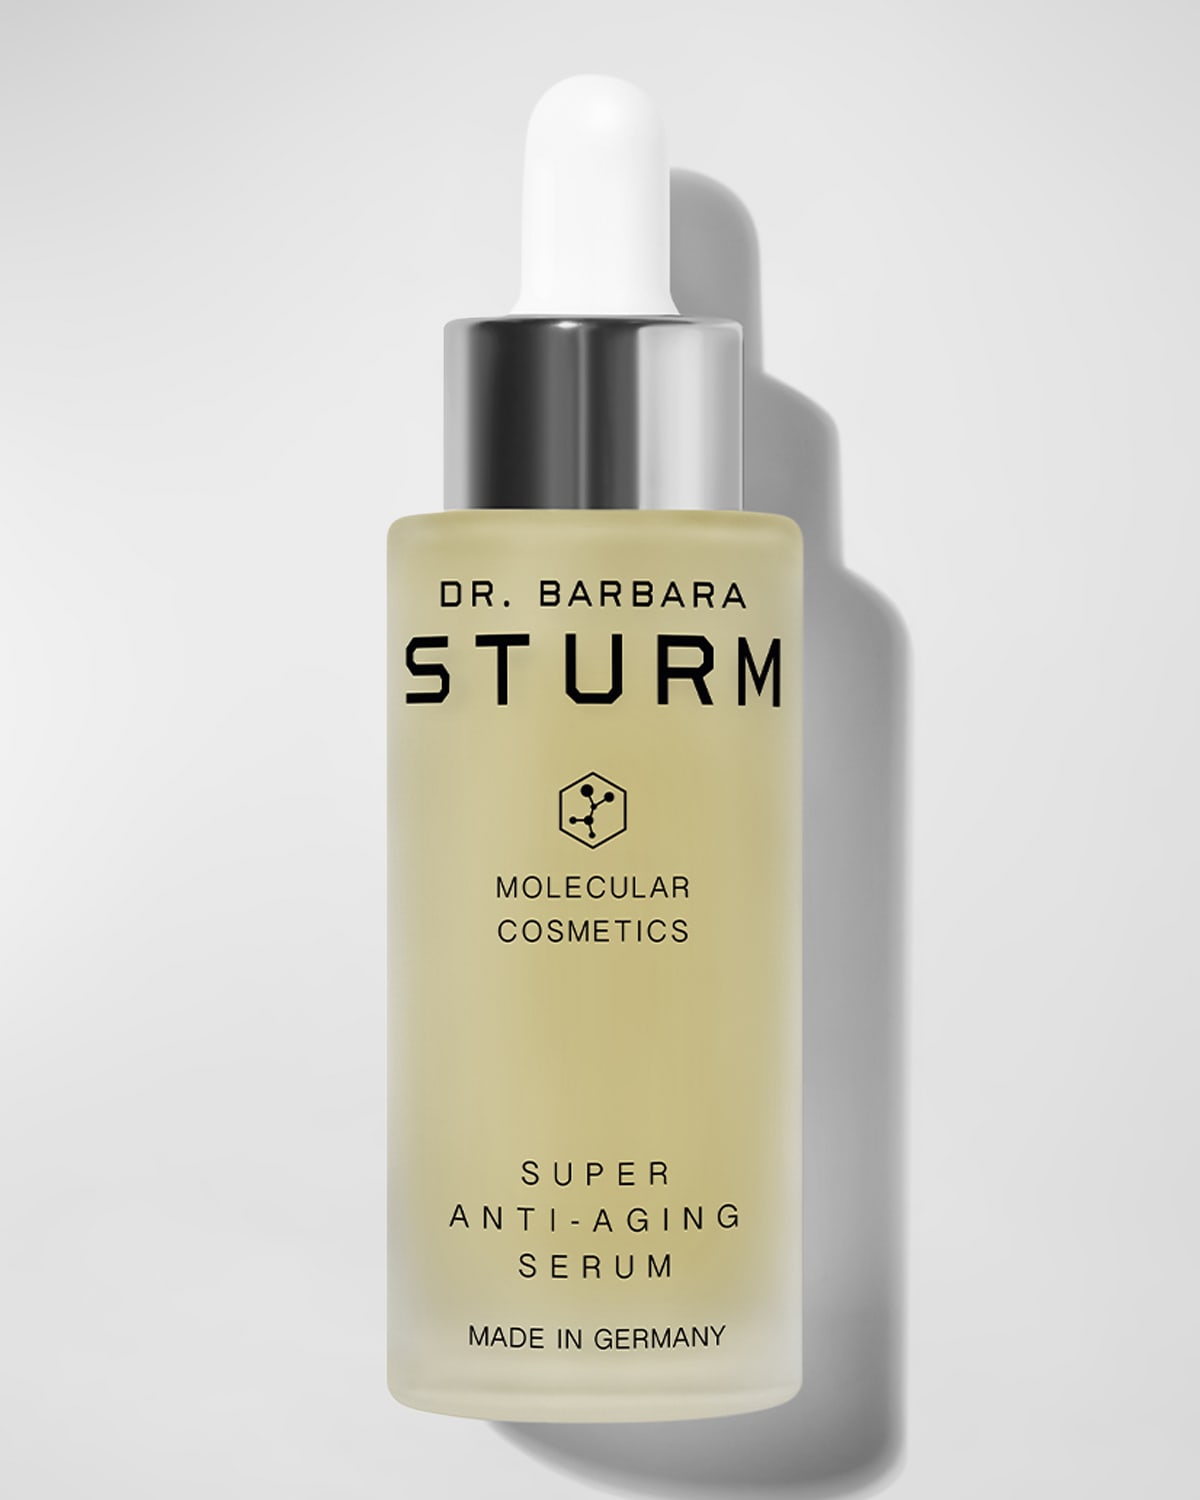 Dr. Barbara Sturm Super Anti-Aging Serum, 1 oz.